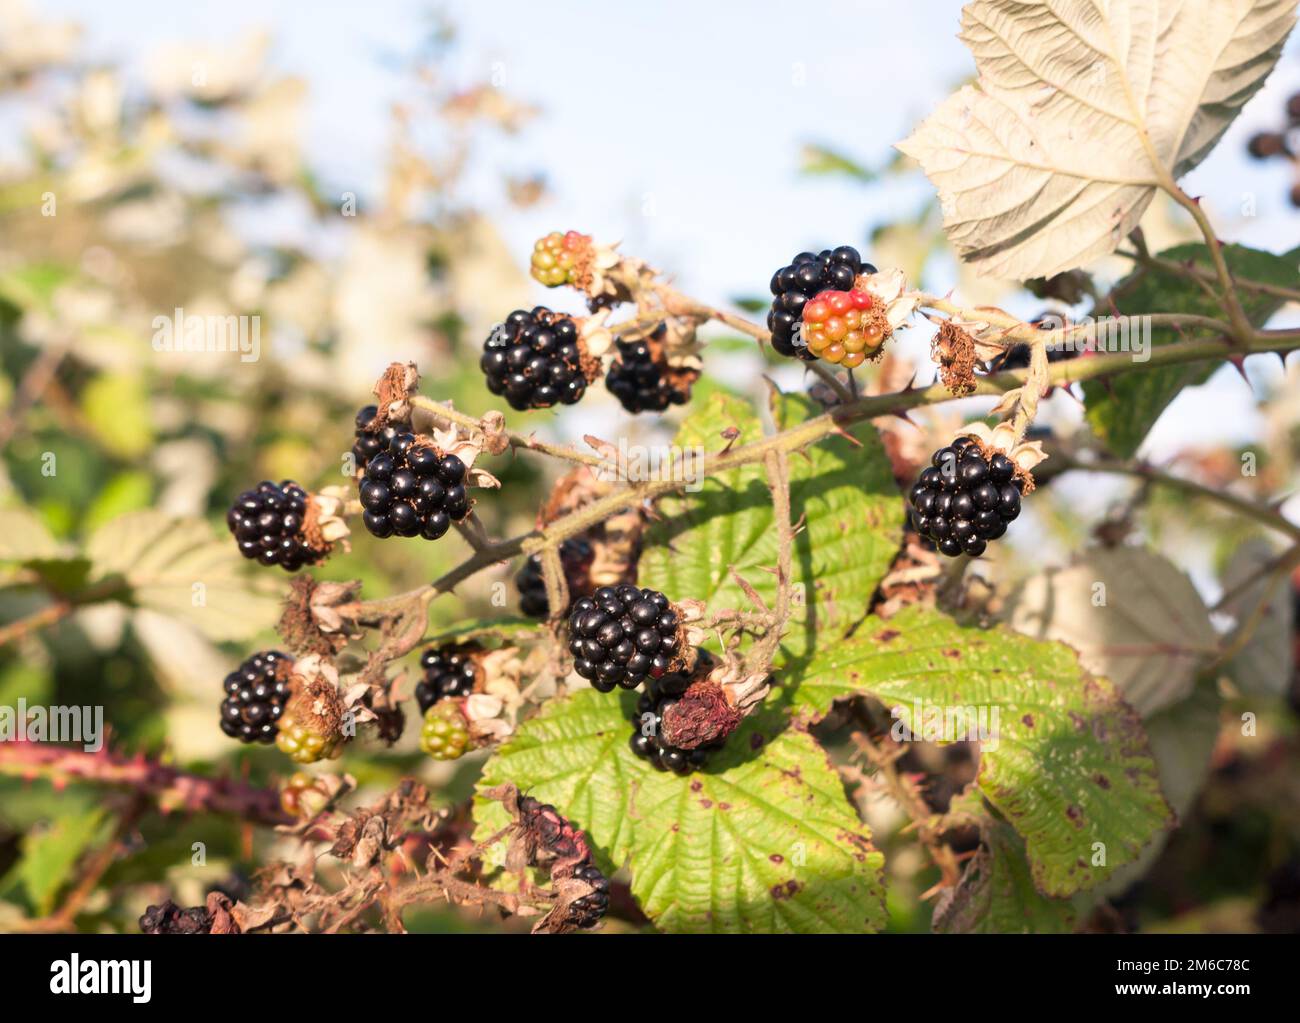 Black lush and ripe blackberries outside on brambles Stock Photo